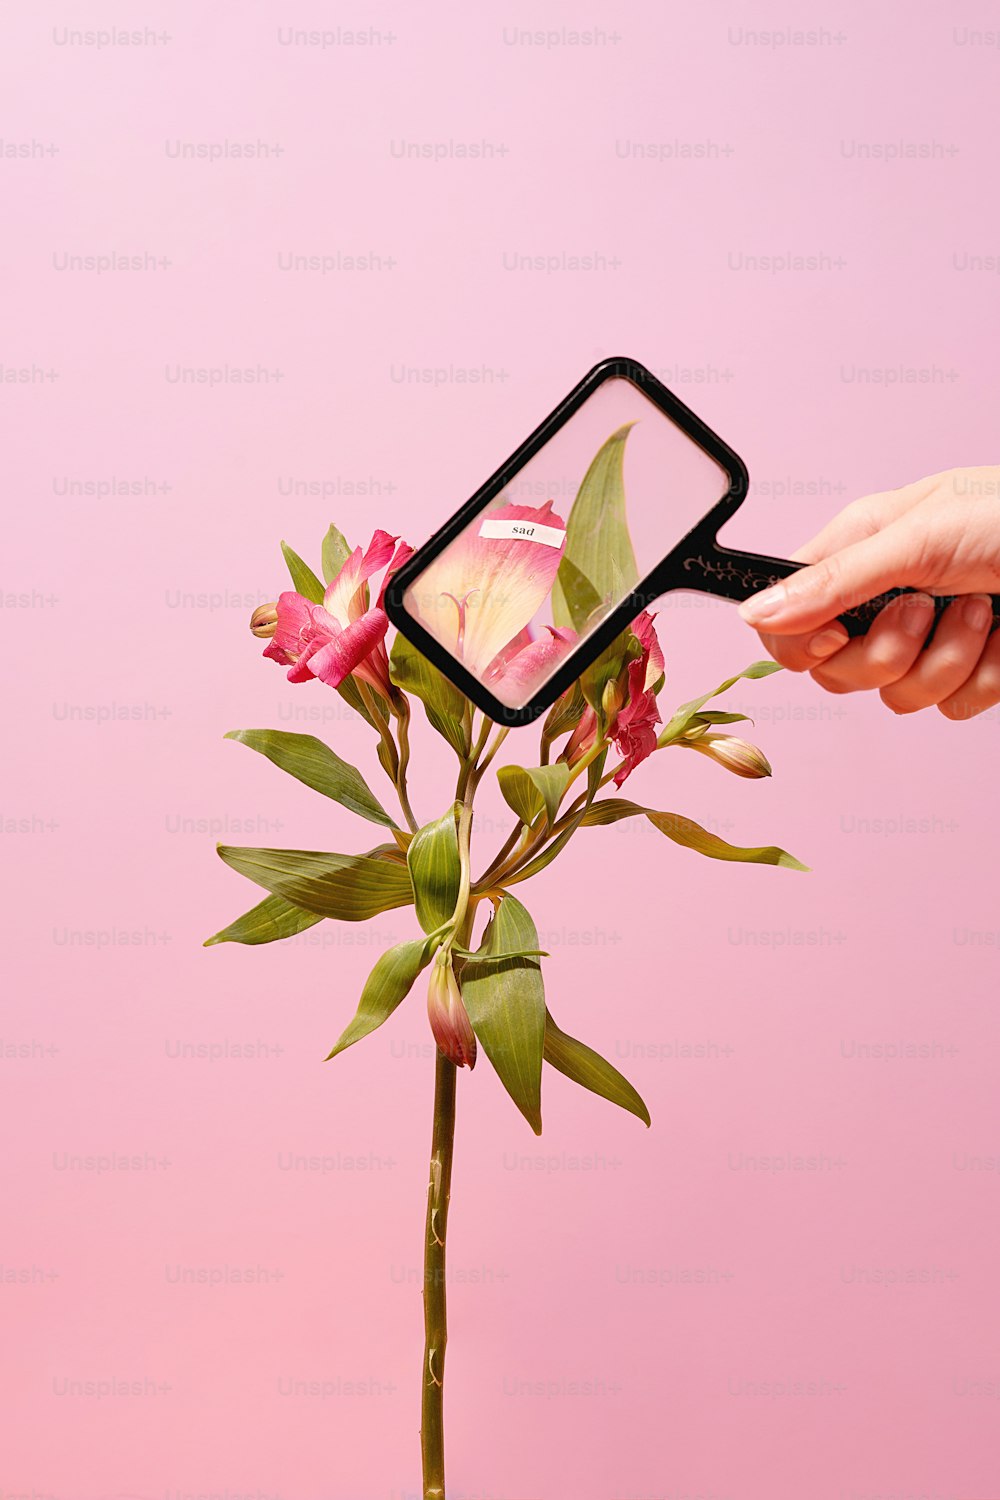 Una persona sosteniendo una flor frente a un fondo rosa